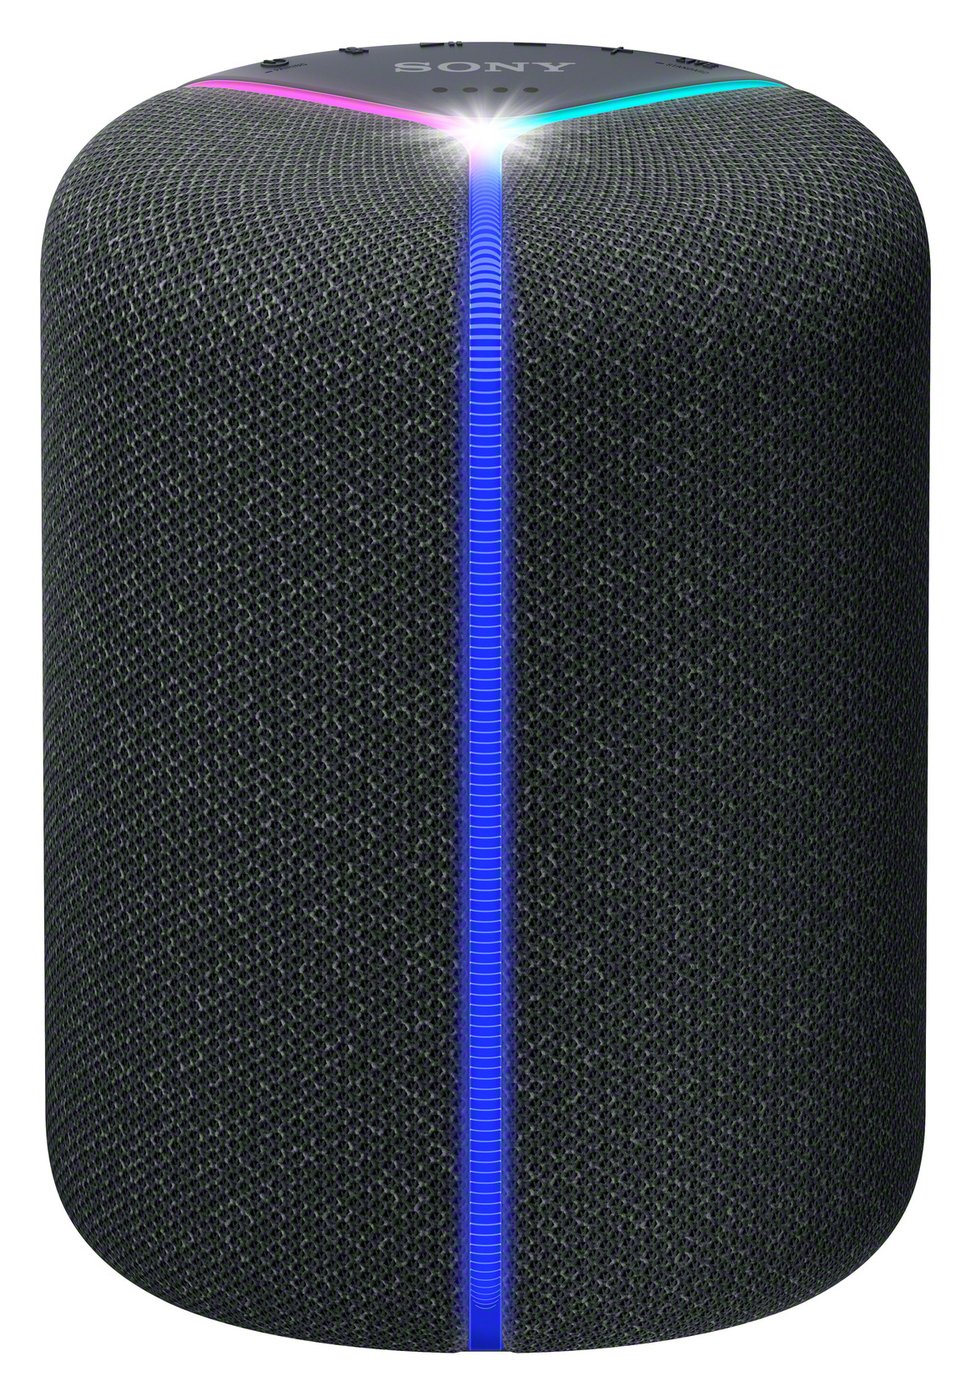 Sony SRSXB402 Wireless Speaker - Black